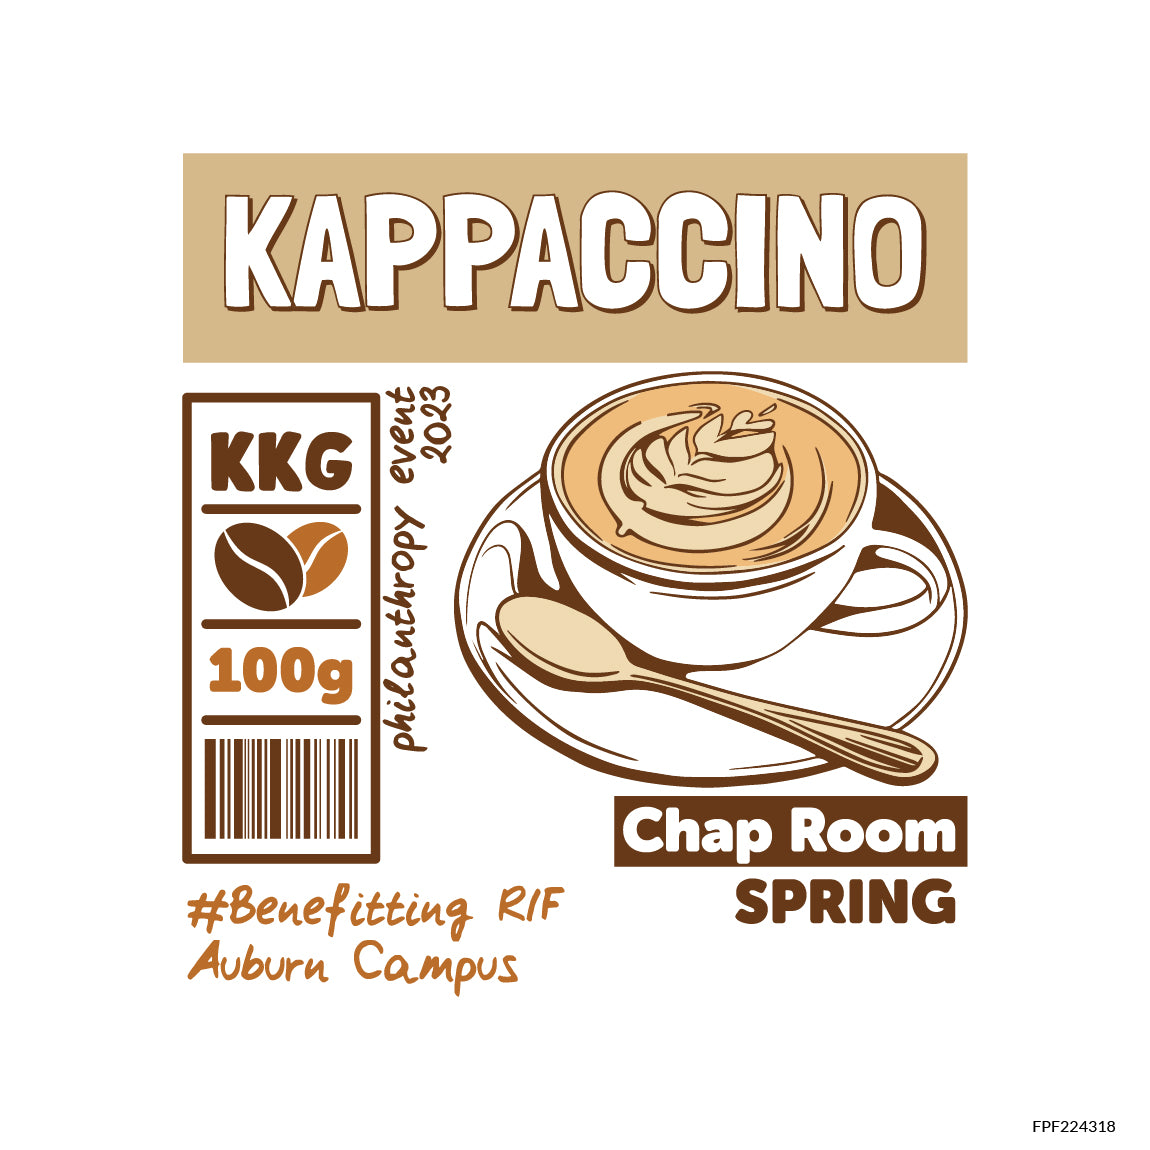 Cup of Kappa